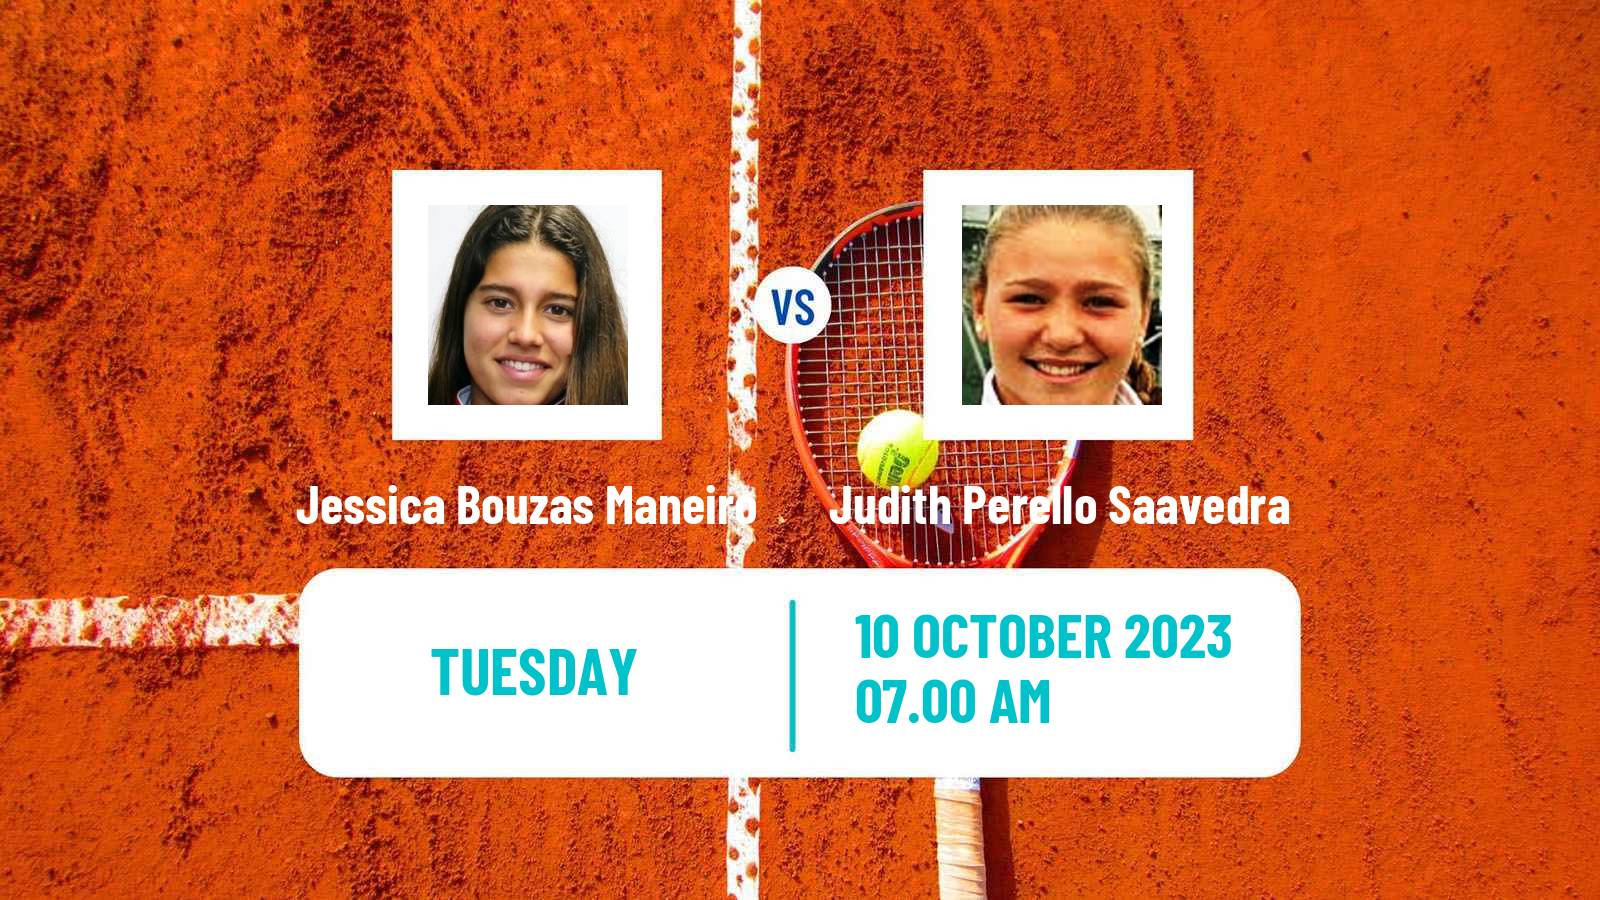 Tennis ITF W25 Seville Women Jessica Bouzas Maneiro - Judith Perello Saavedra